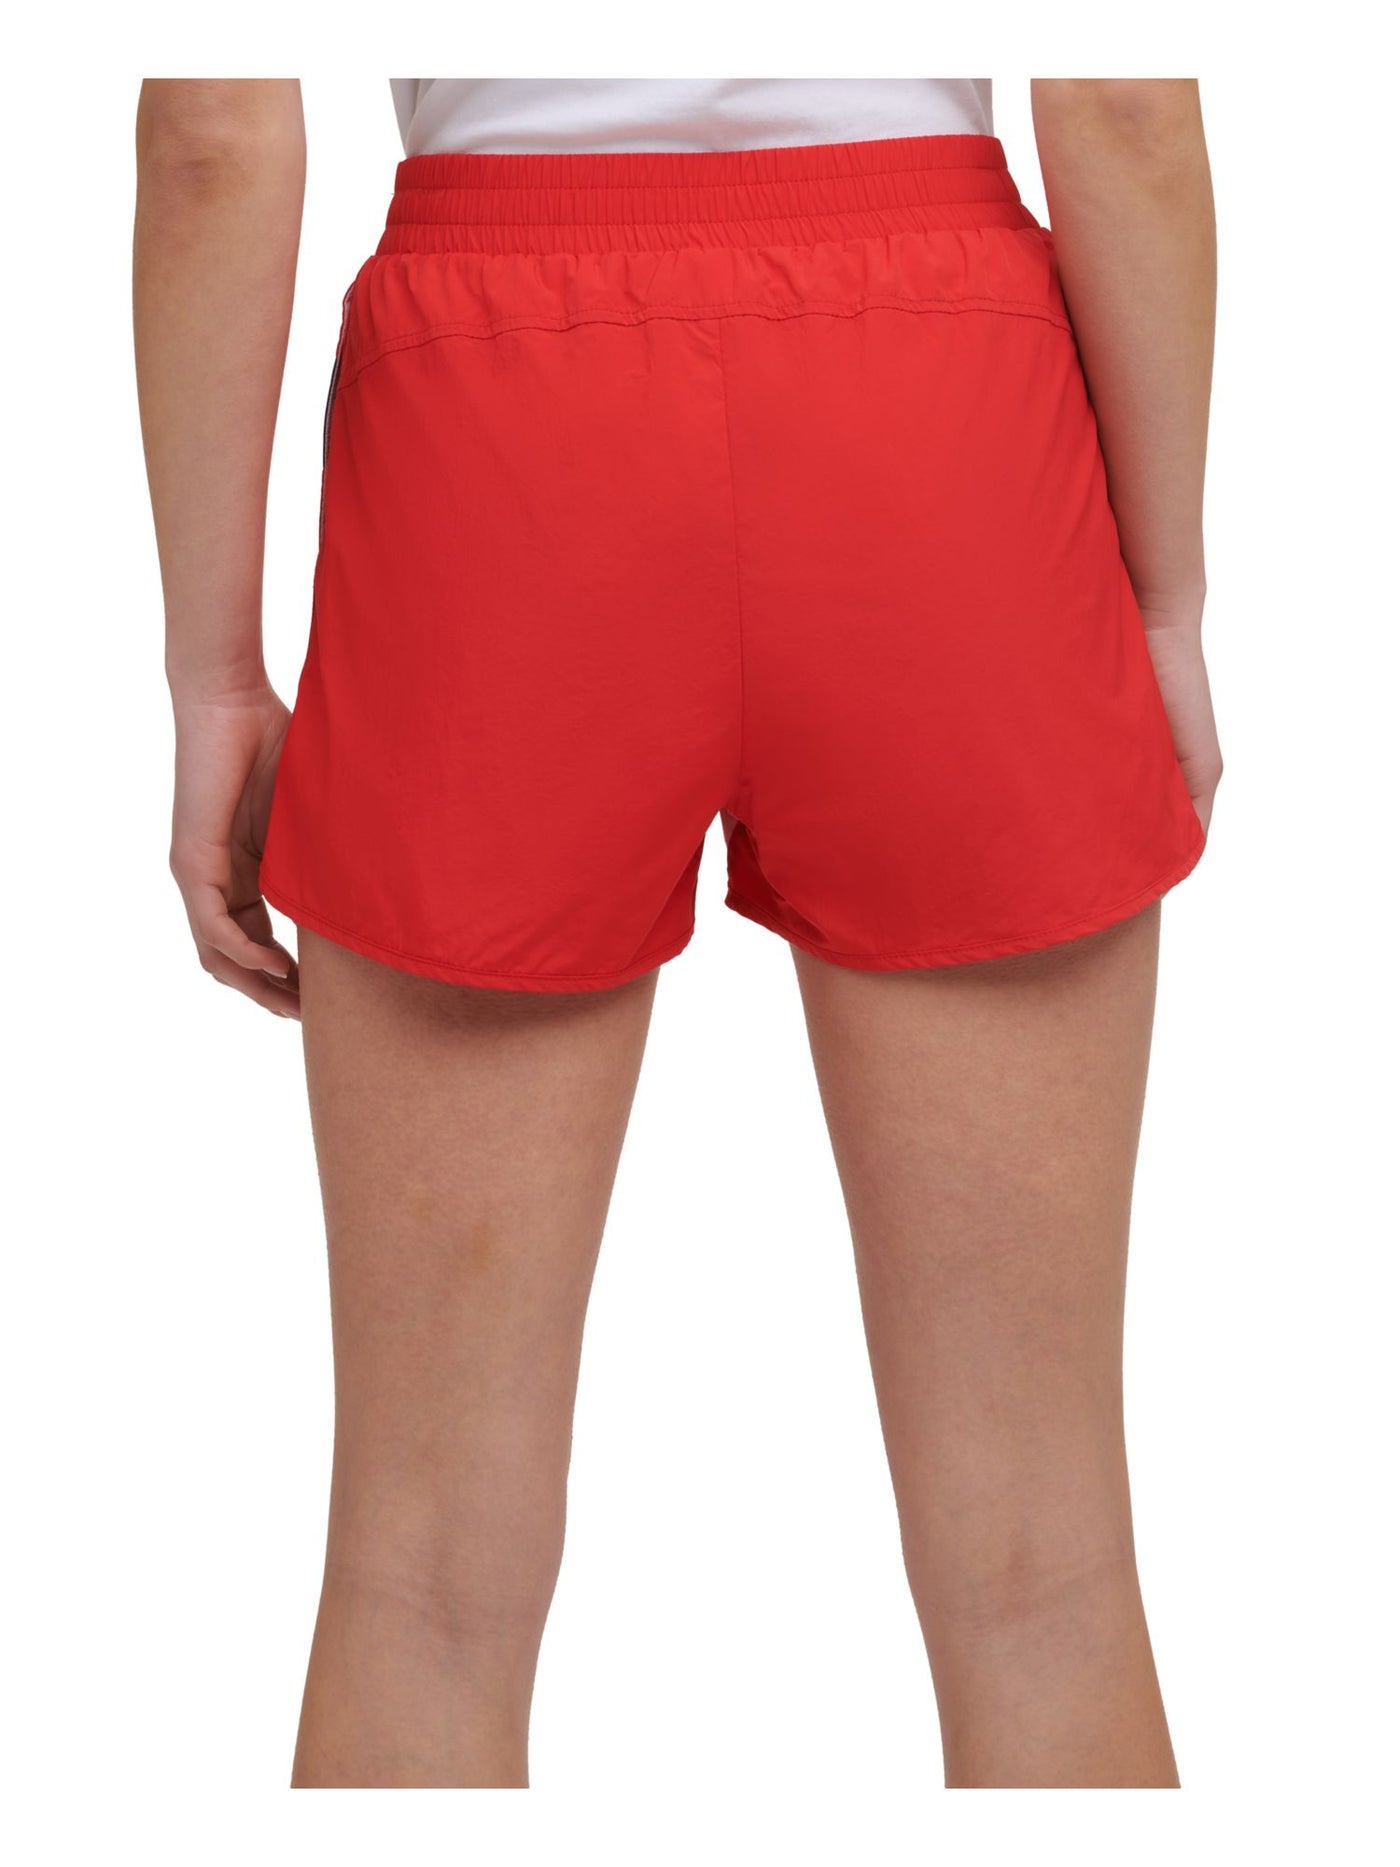 TOMMY HILFIGER SPORT Womens Red Stretch Pocketed Interior Briefs Elastic Waist Logo Graphic Active Wear Shorts S